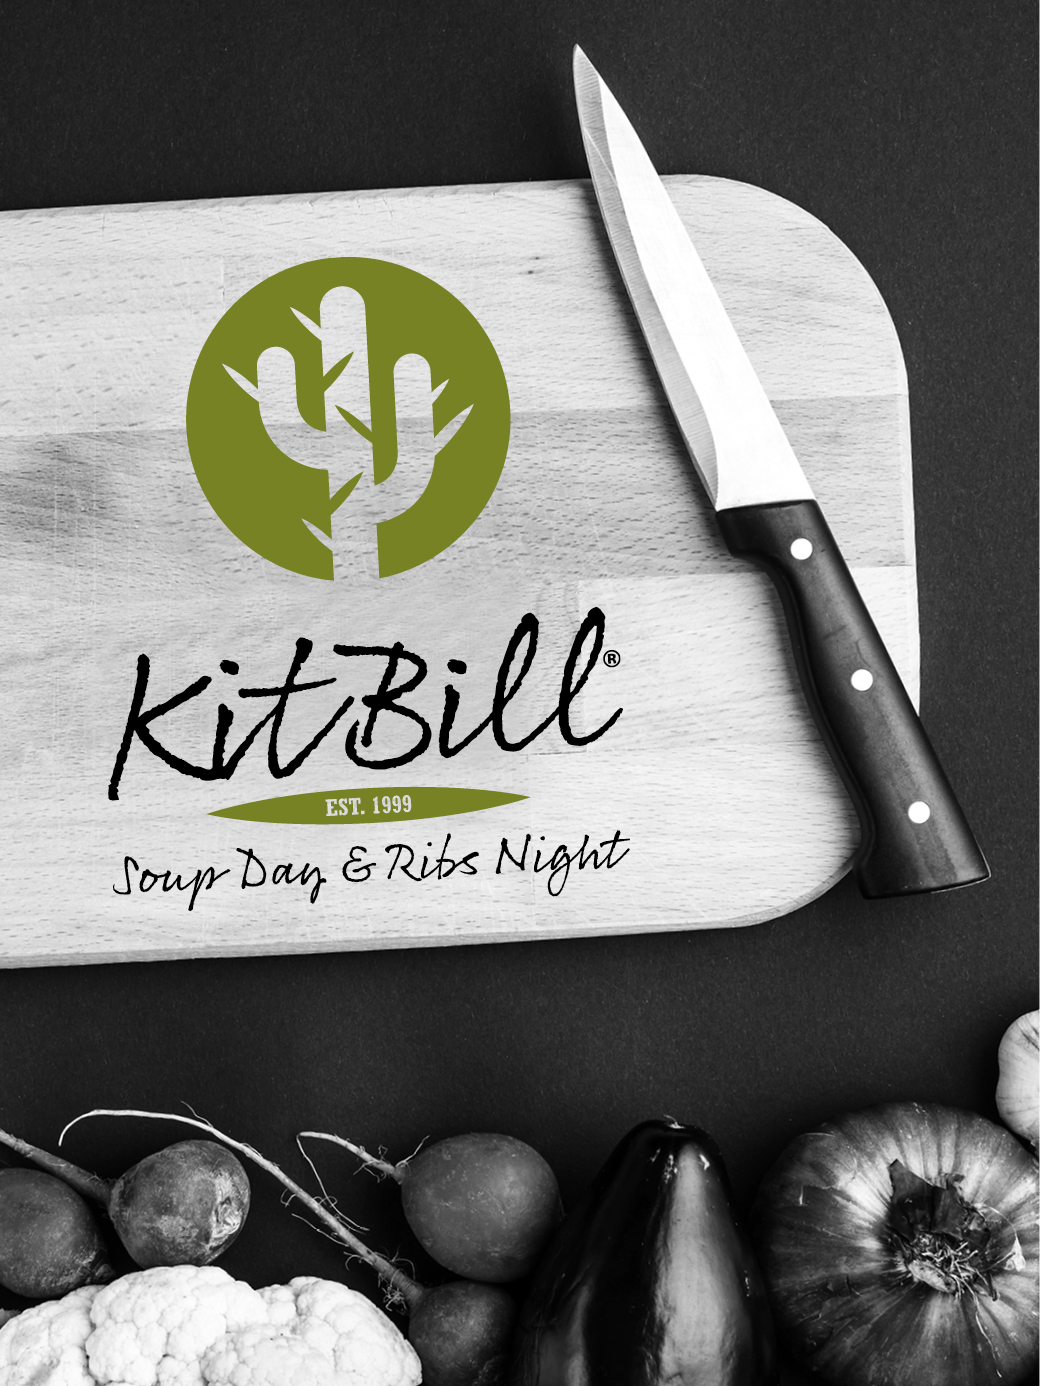 KitBill Soup & Ribs